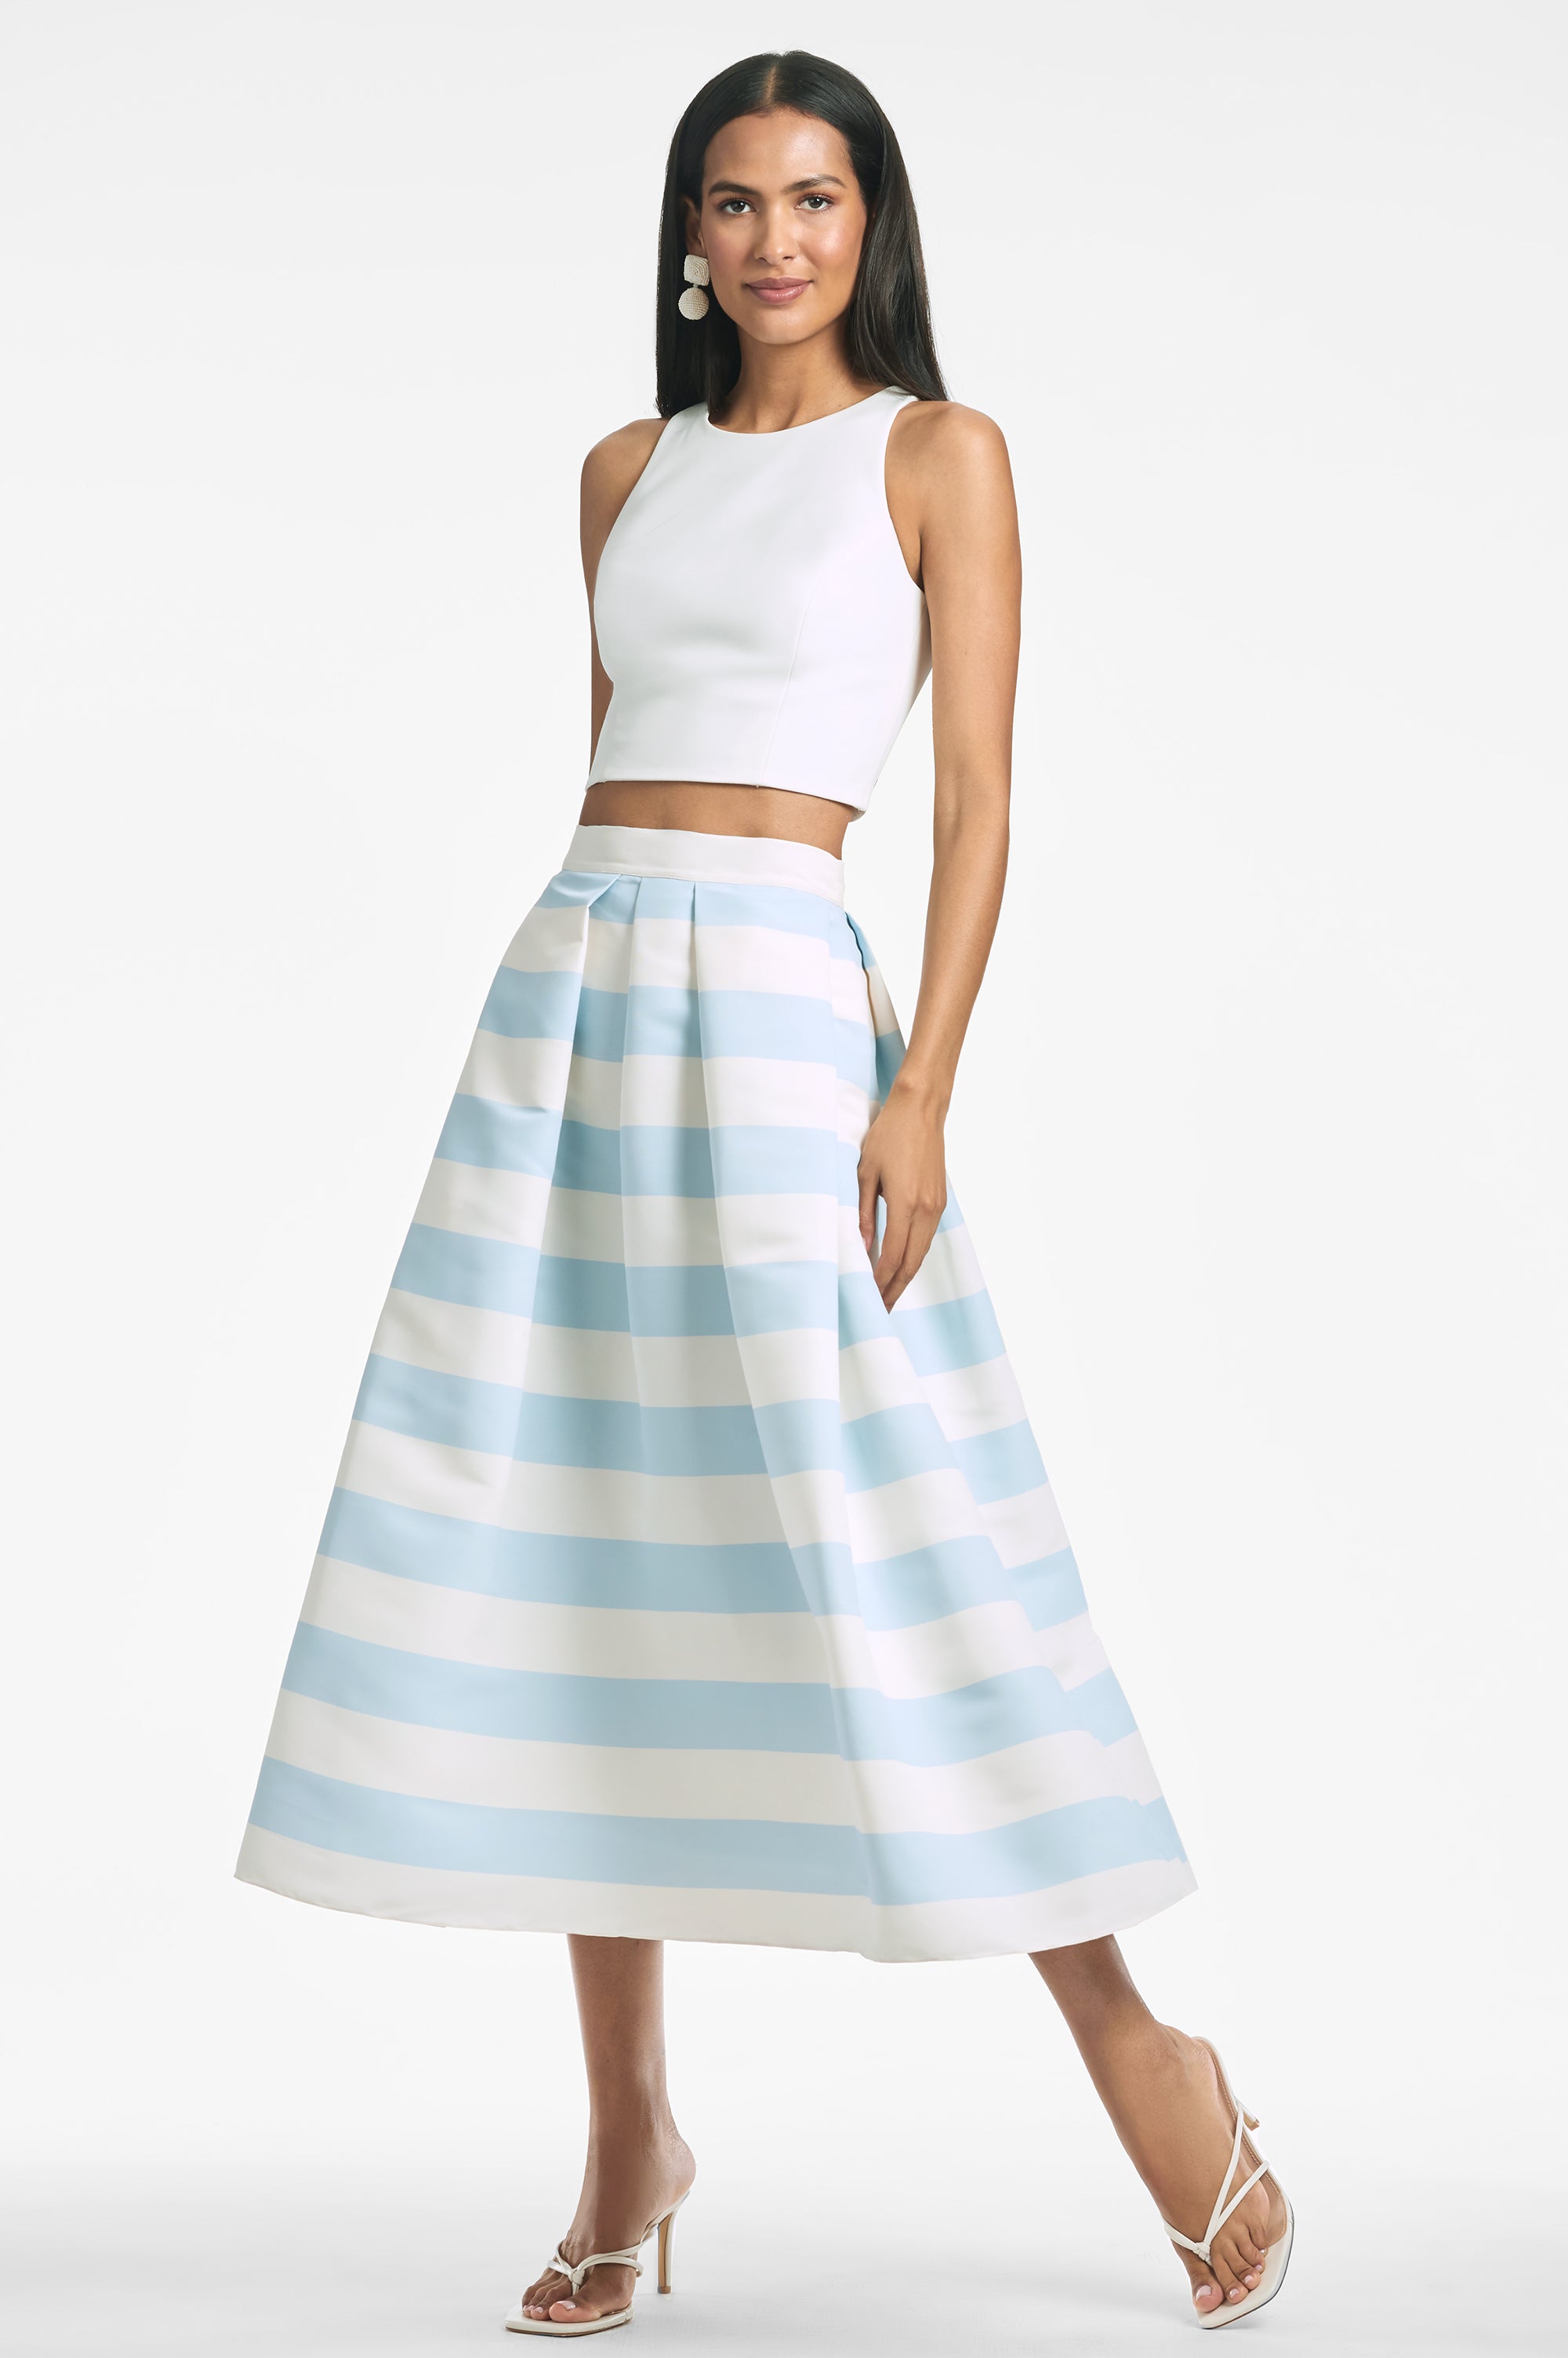 Leighton Skirt - Sailor Stripe - Final Sale